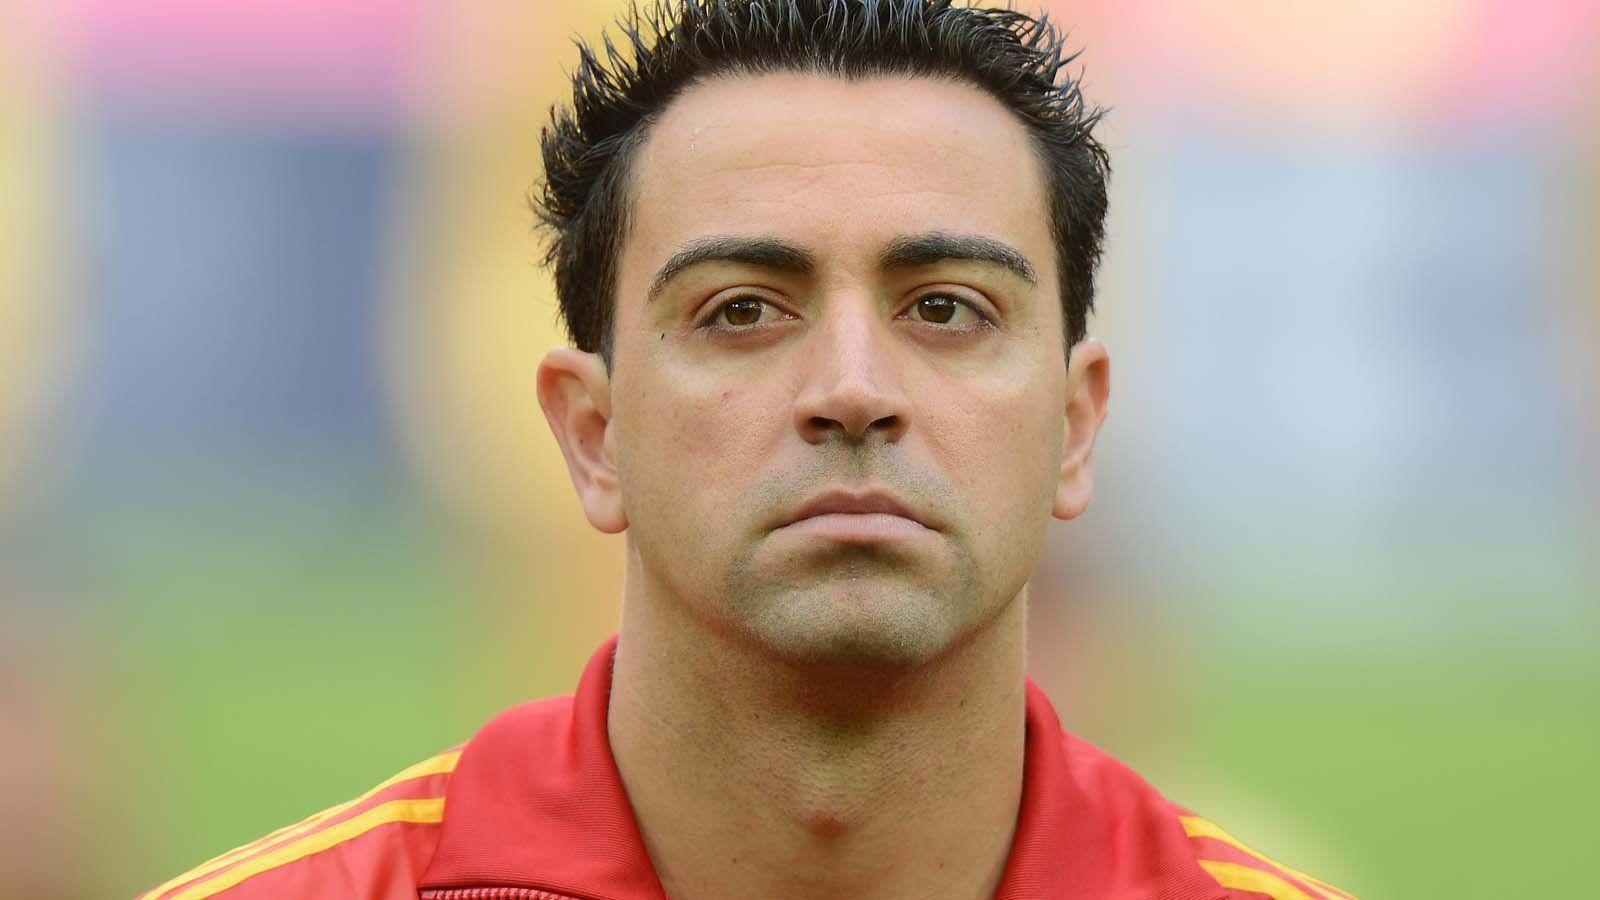 Spanish midfielder, Xavi Hernandez, quits international football